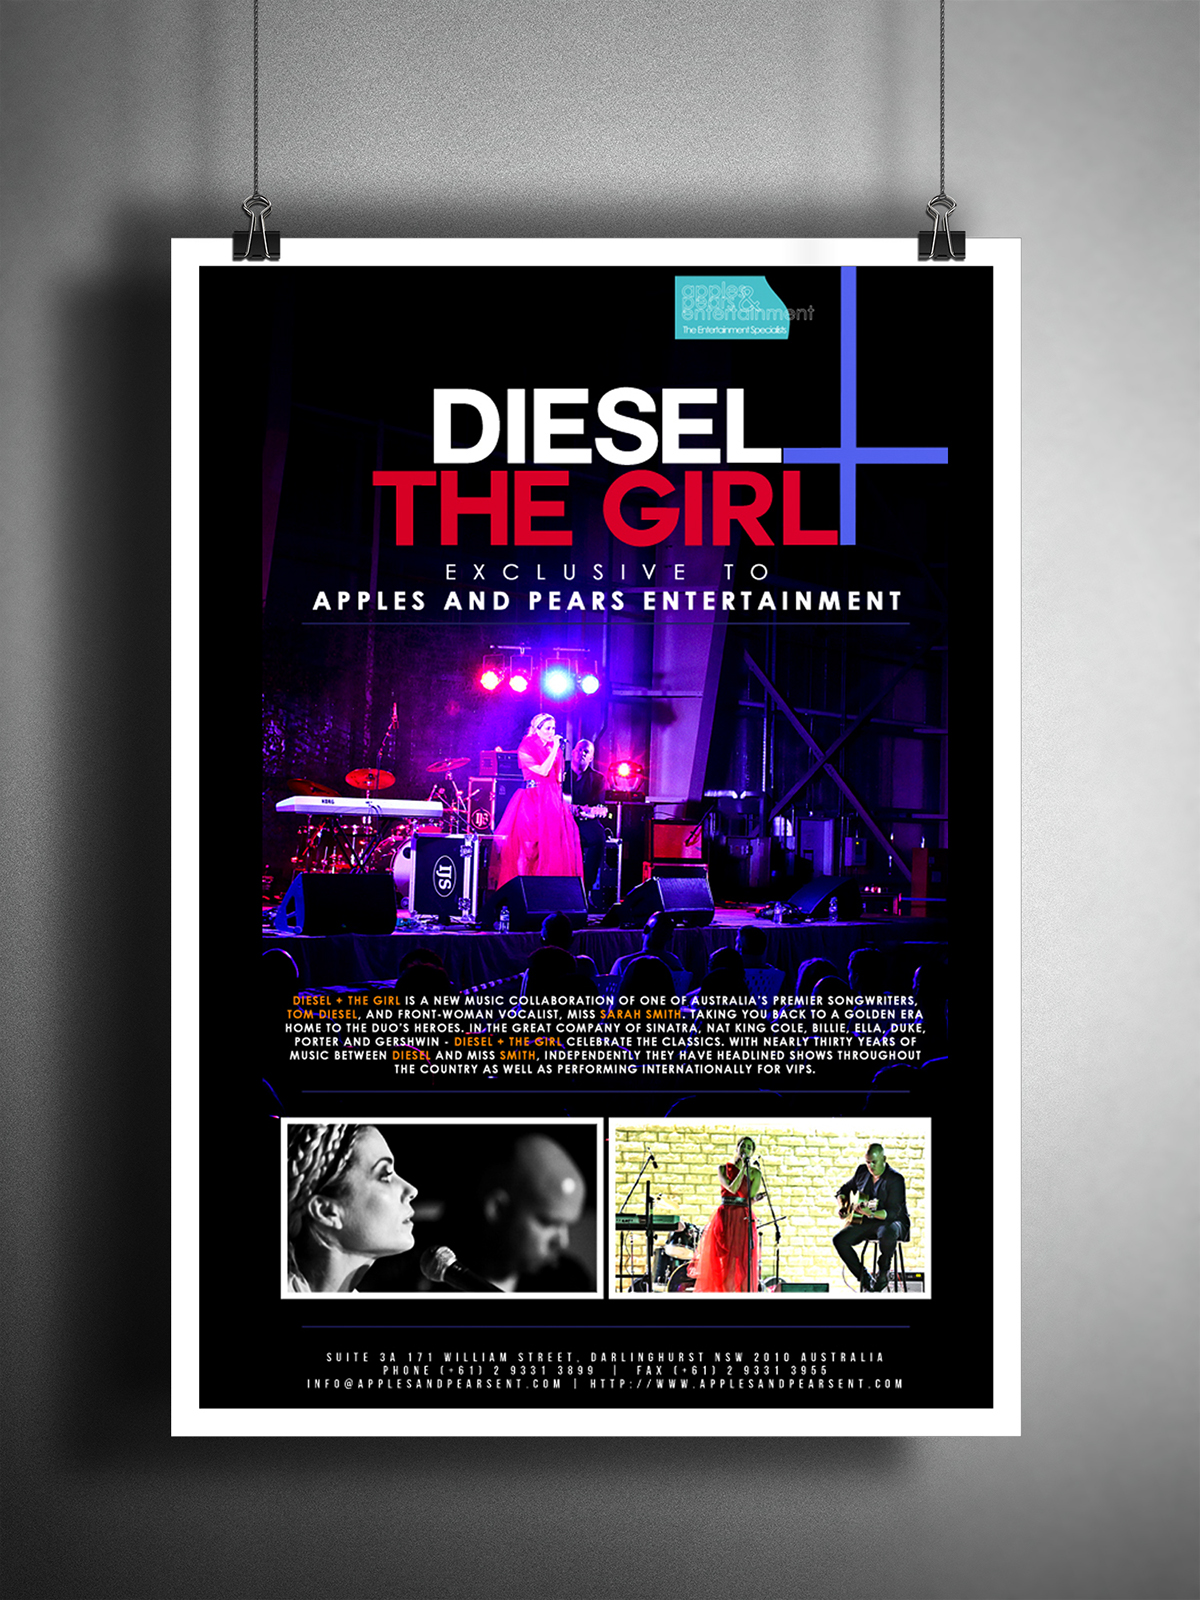 Diesel girl sydney musician Diesel and theGirl